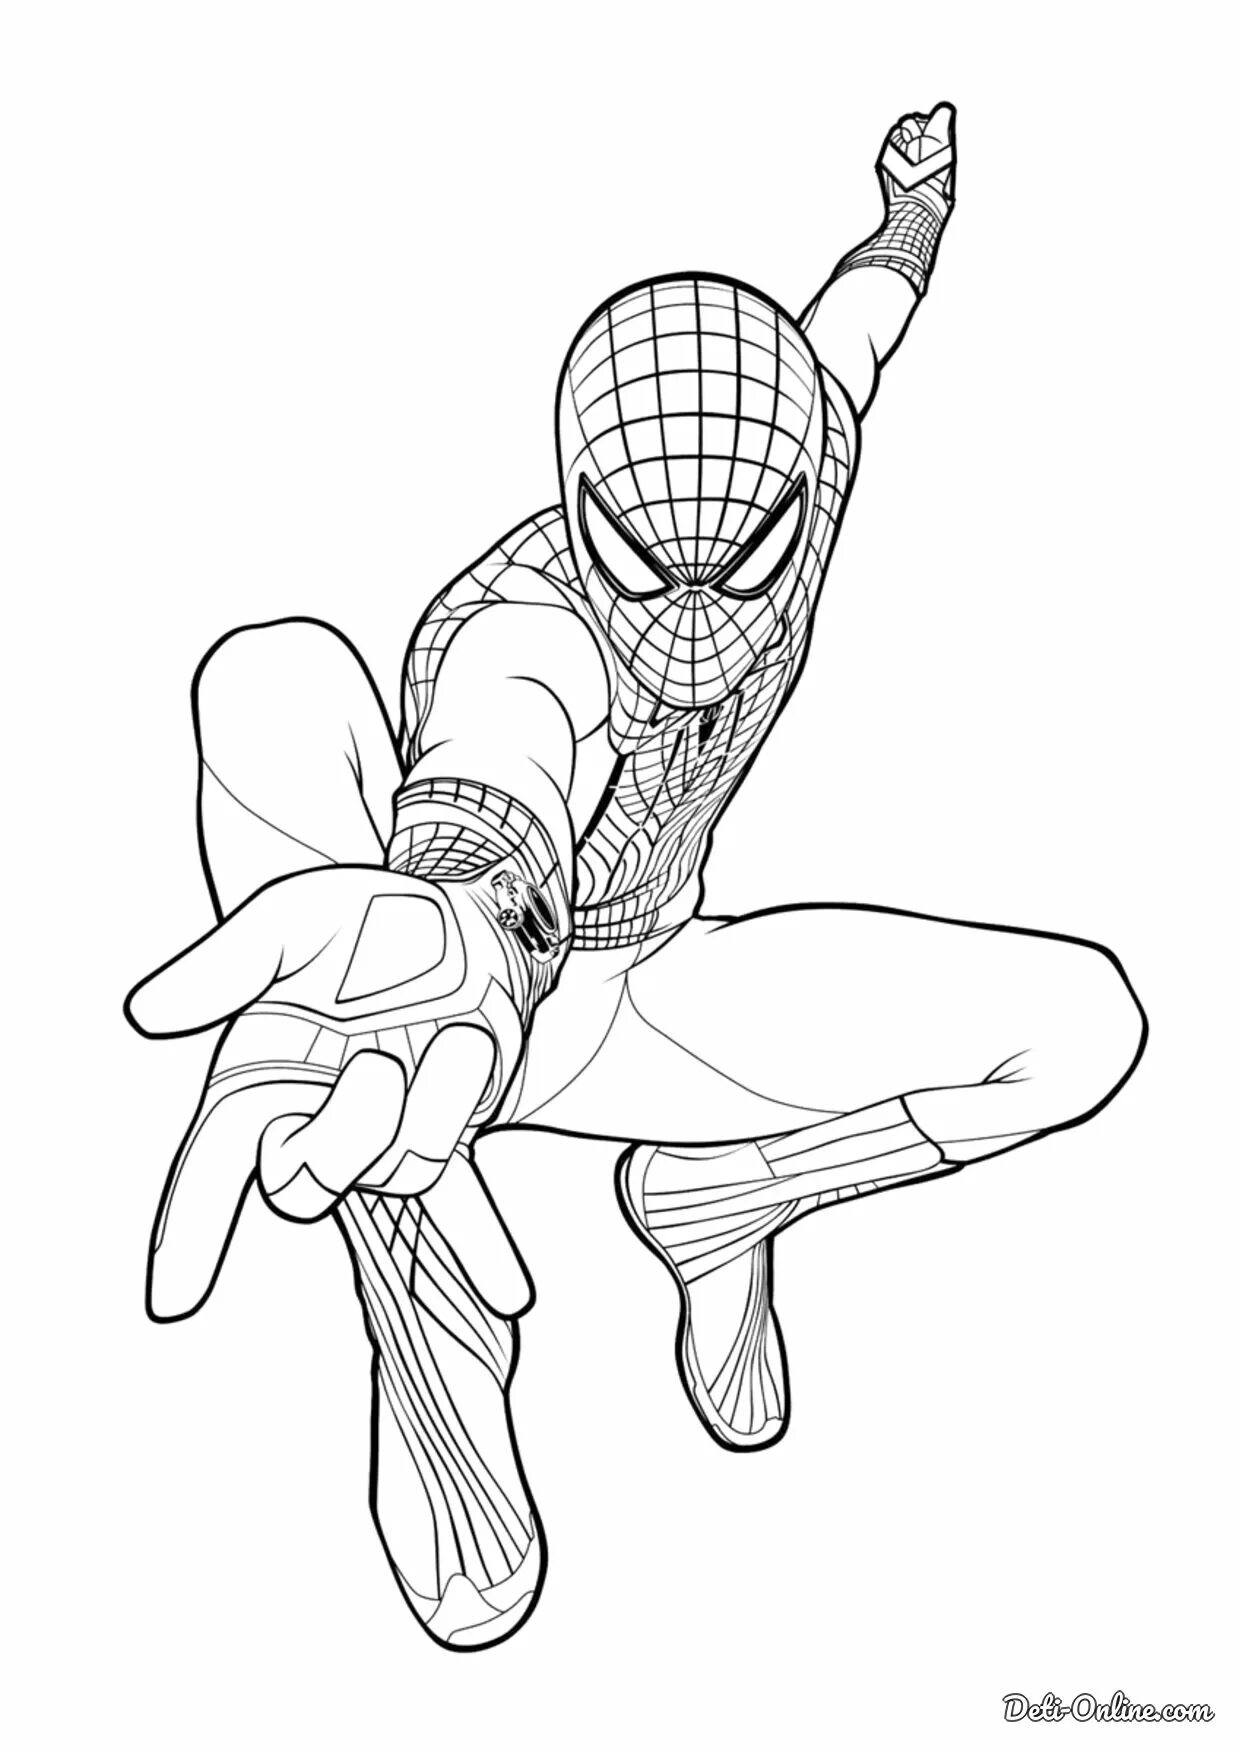 Spiderman drawing #3